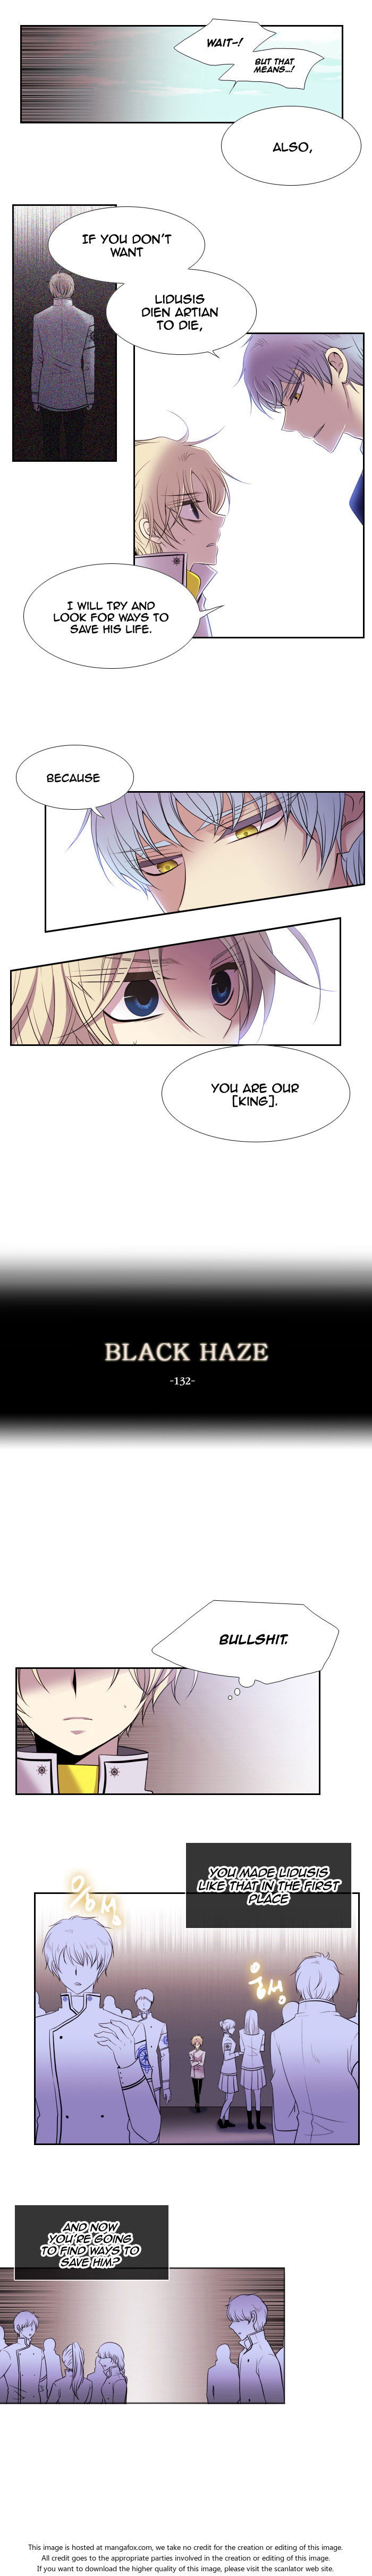 Black Haze Chapter 132 page 2